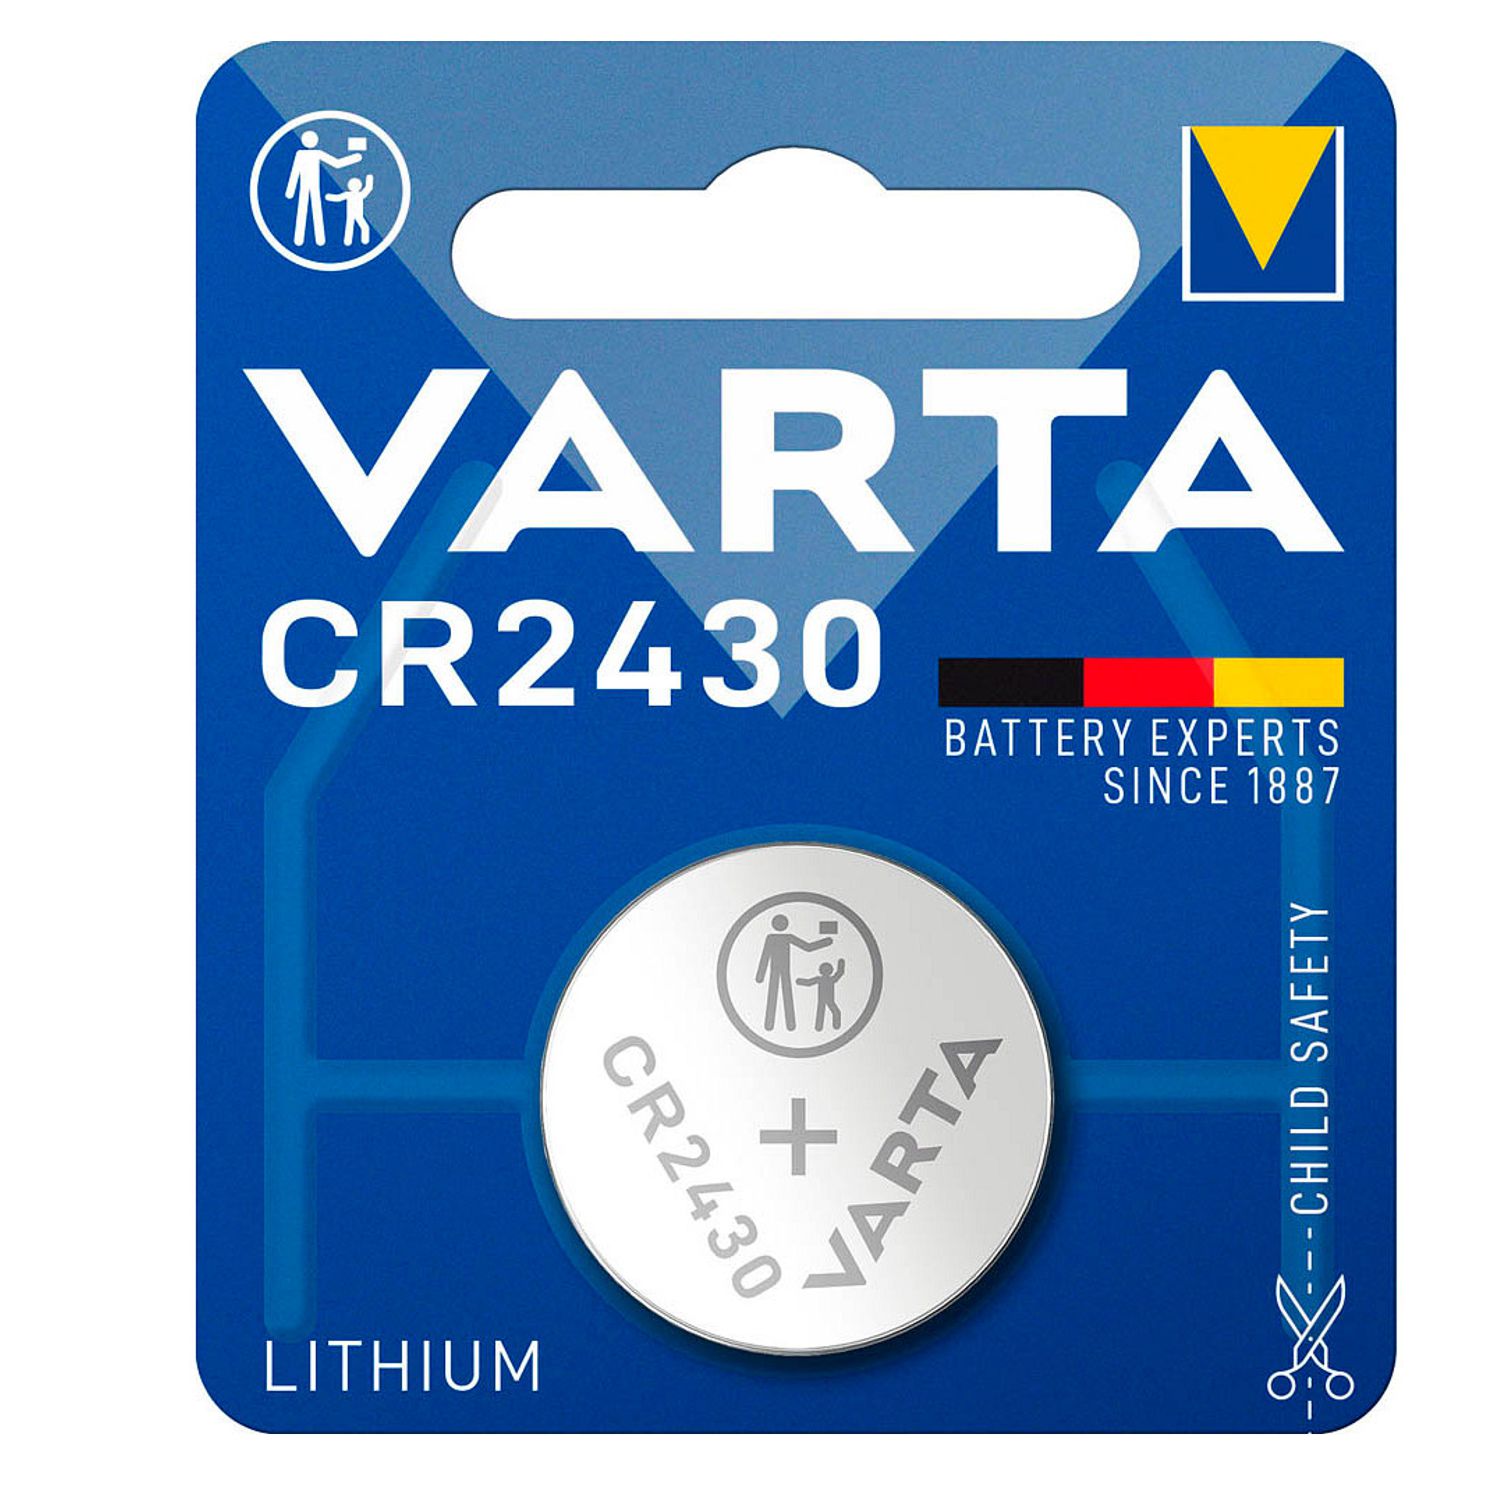 Varta CR2430 Lithium Knopfzelle 3 Volt 280mAh